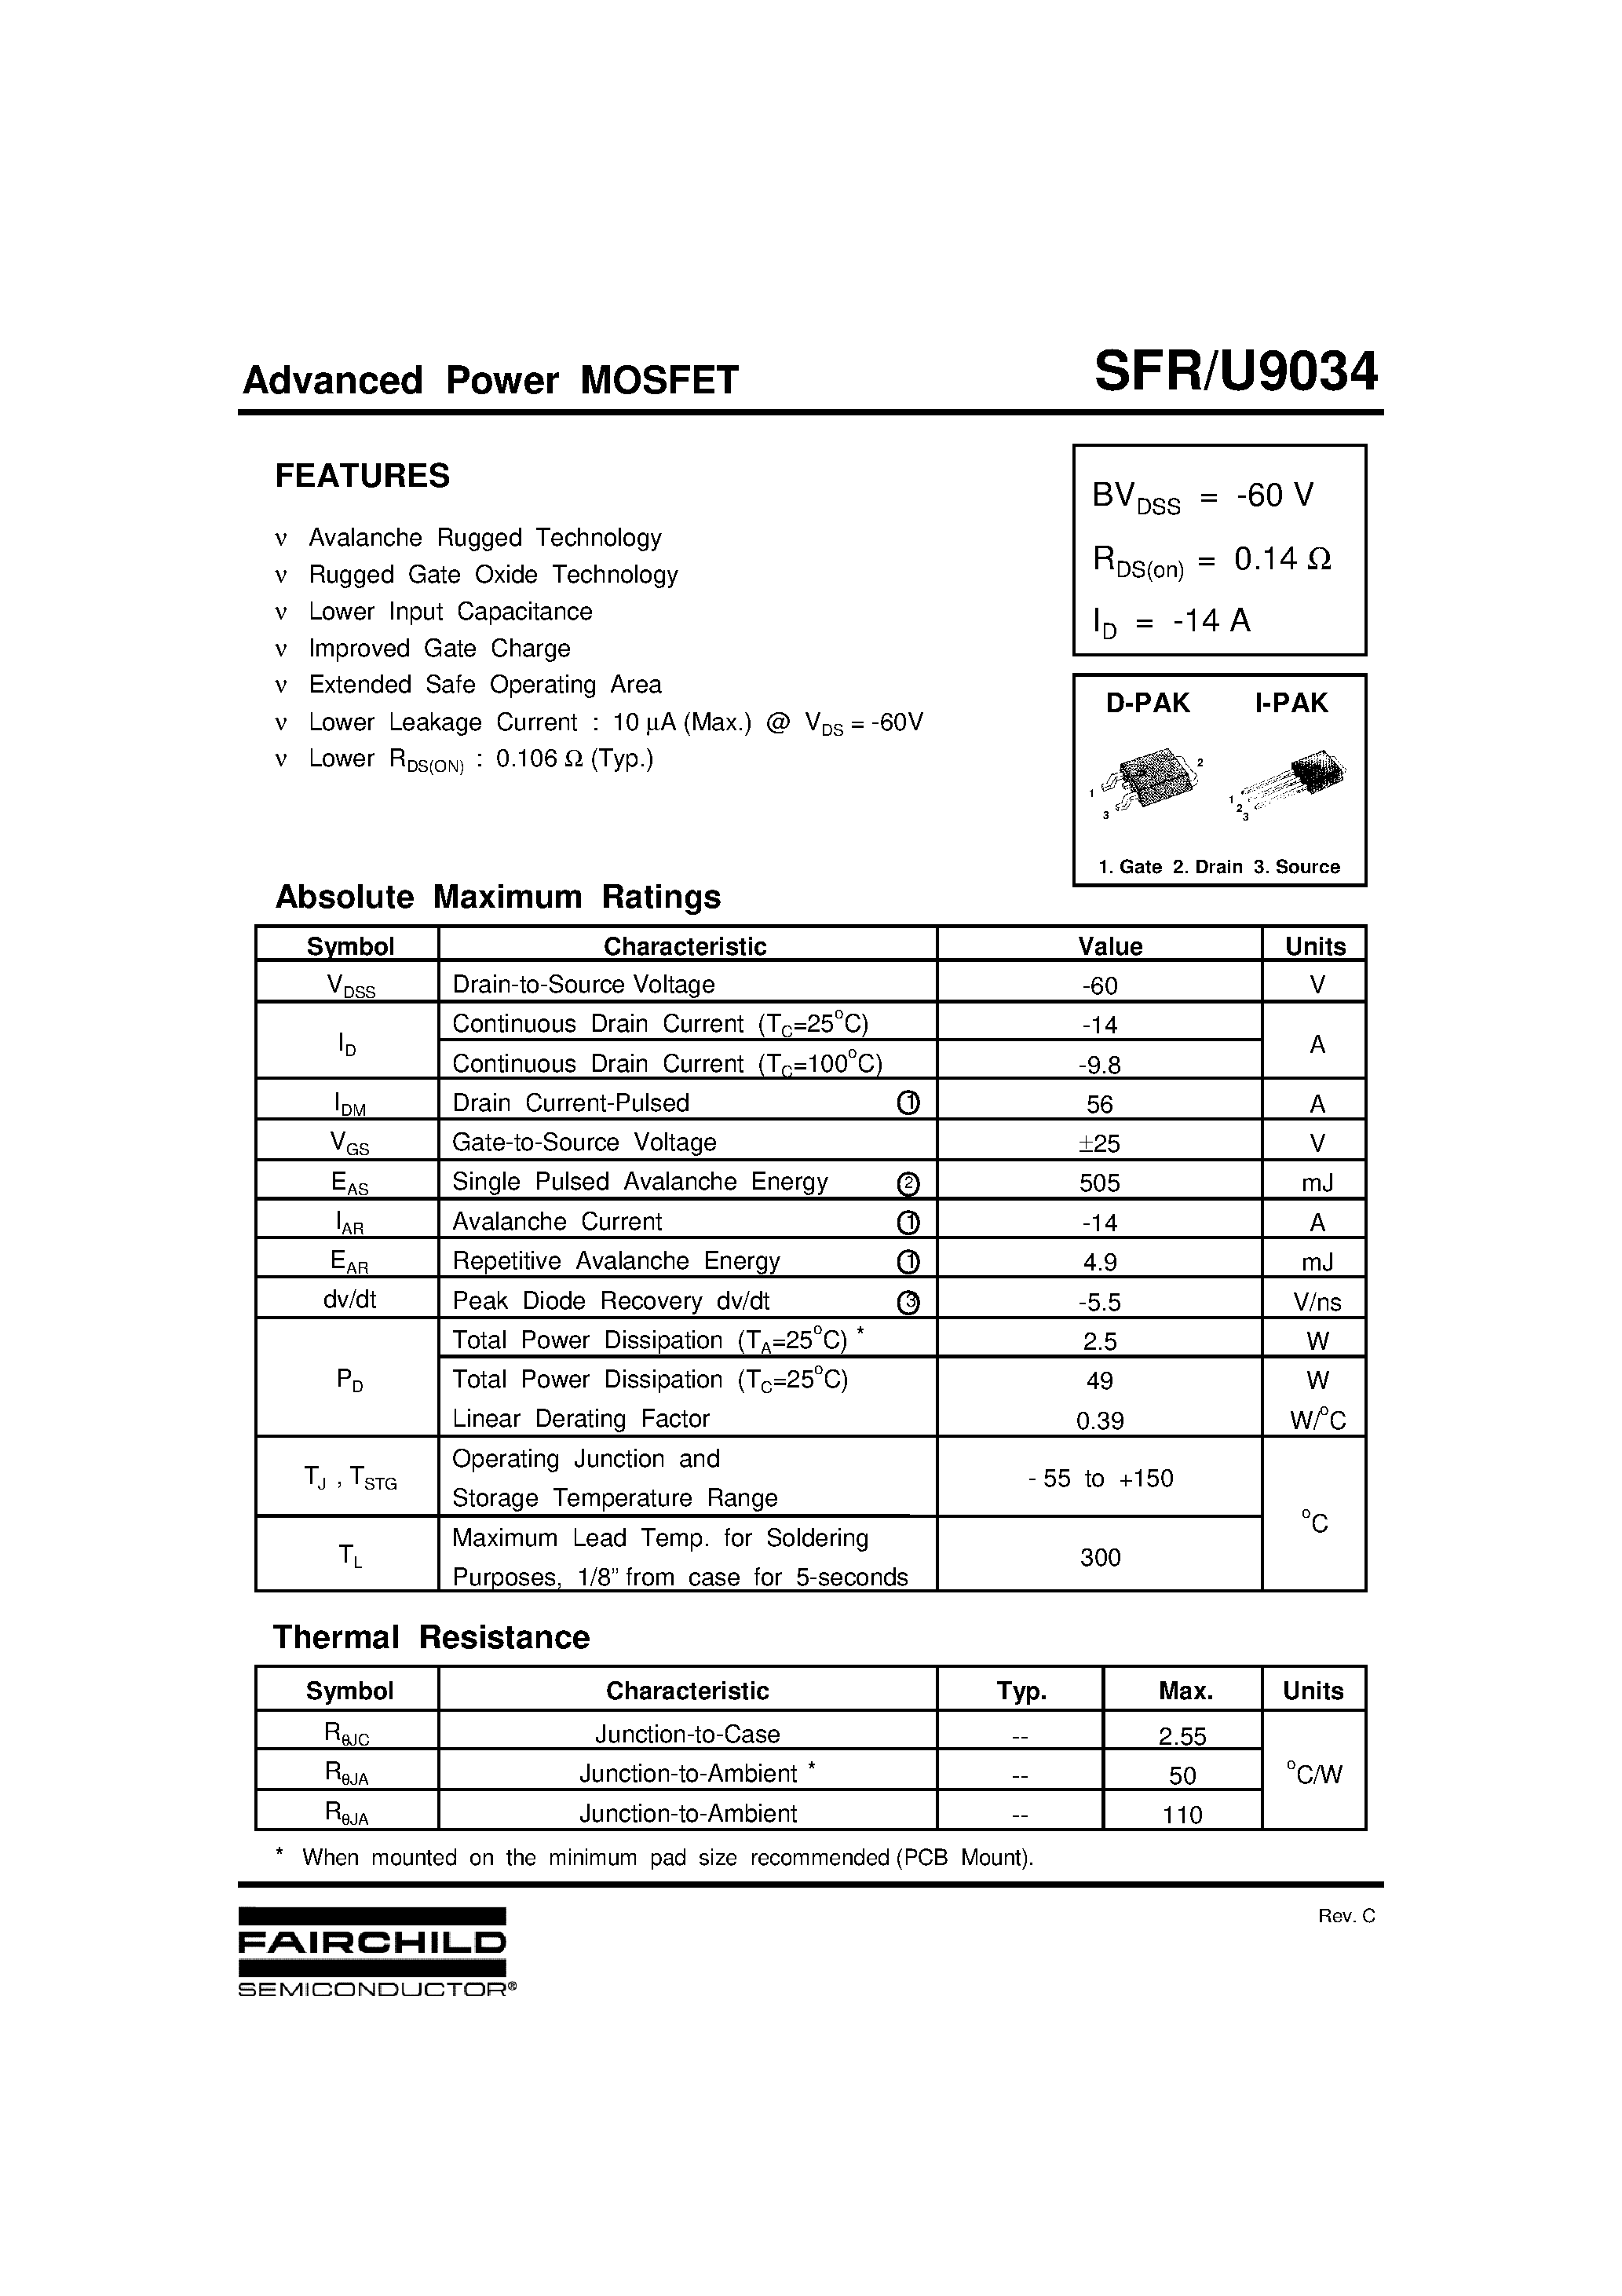 Datasheet SFR9034 - Advanced Power MOSFET page 1